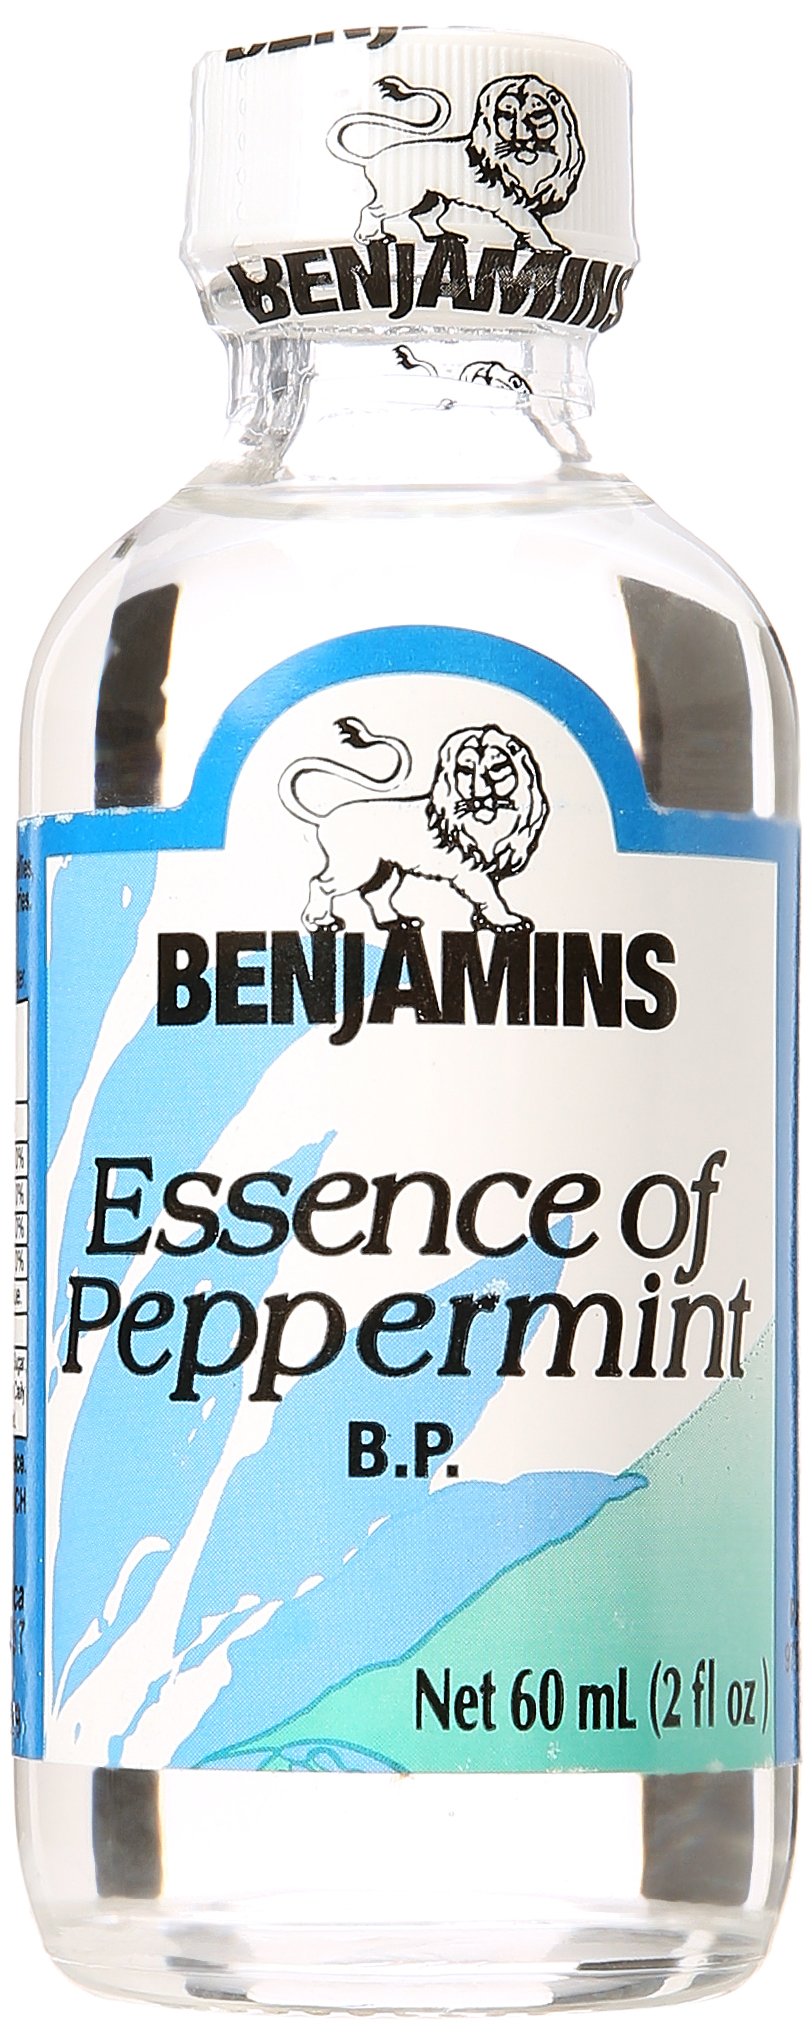 Benjamins Essence of Peppermint